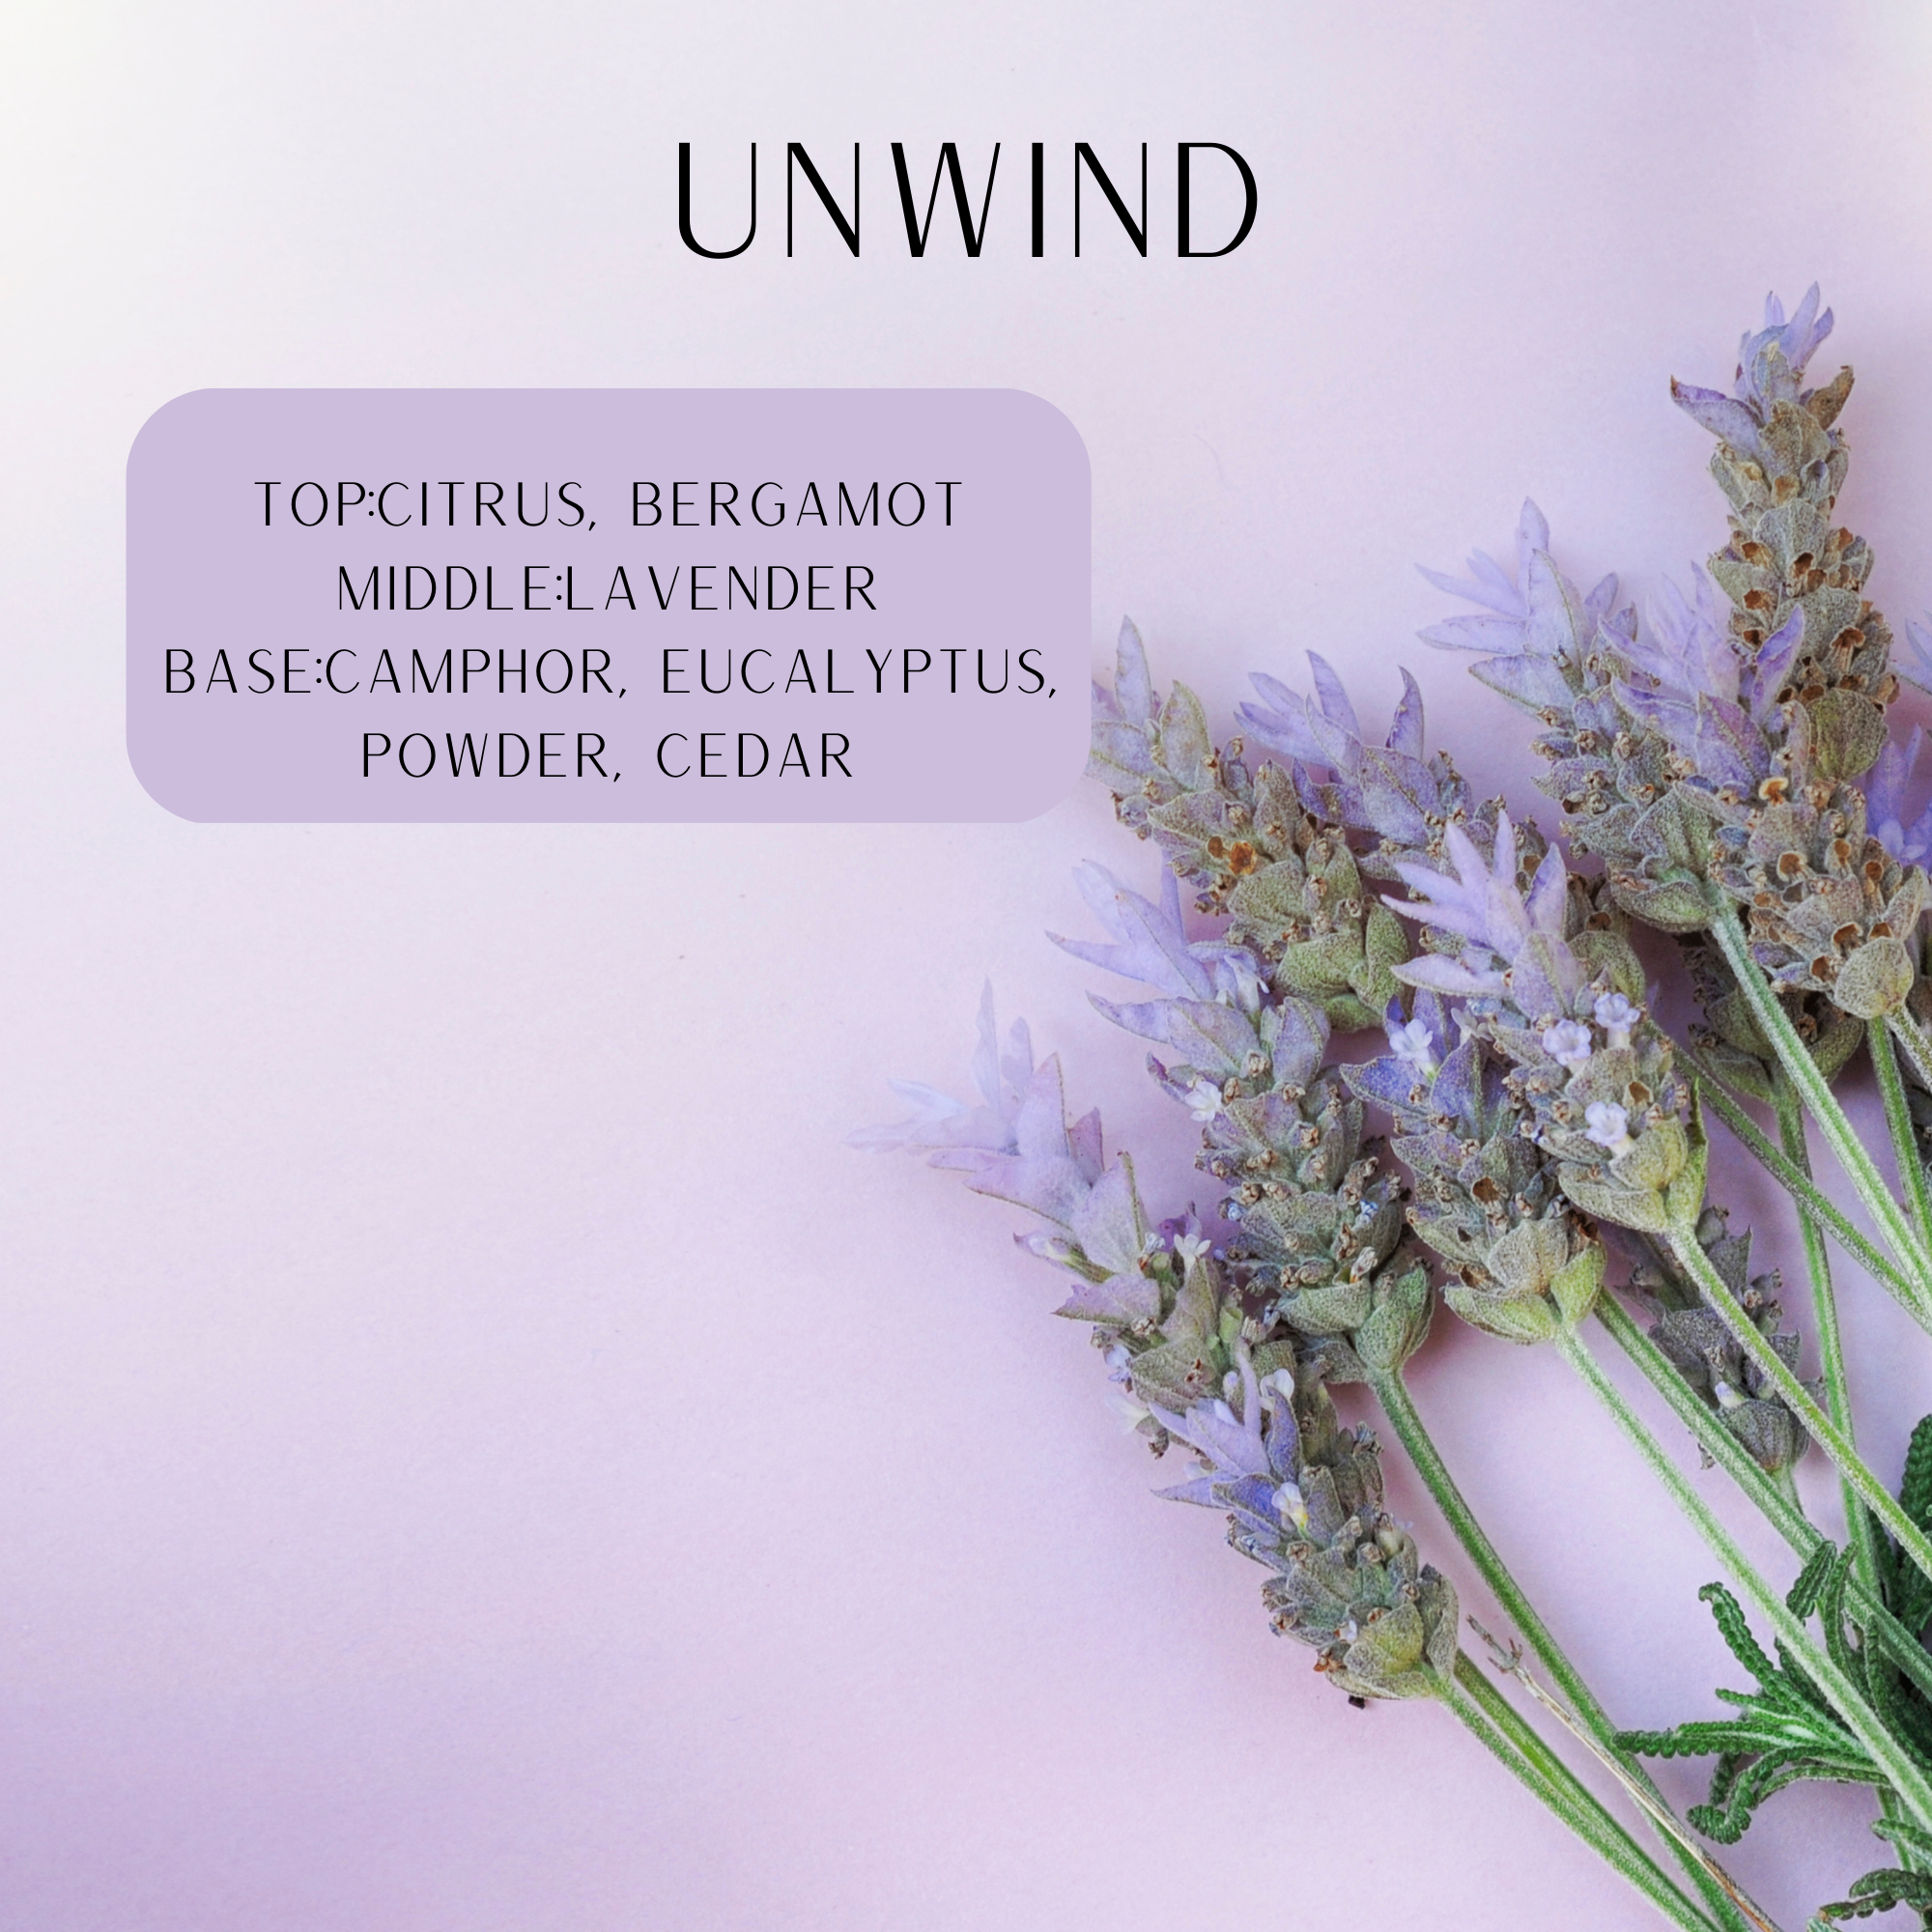 Lavender sprigs on a light lavender background says unwind top:citrus, bergamot middle: lavender base: camphor, eucalyptus, powder, cedar